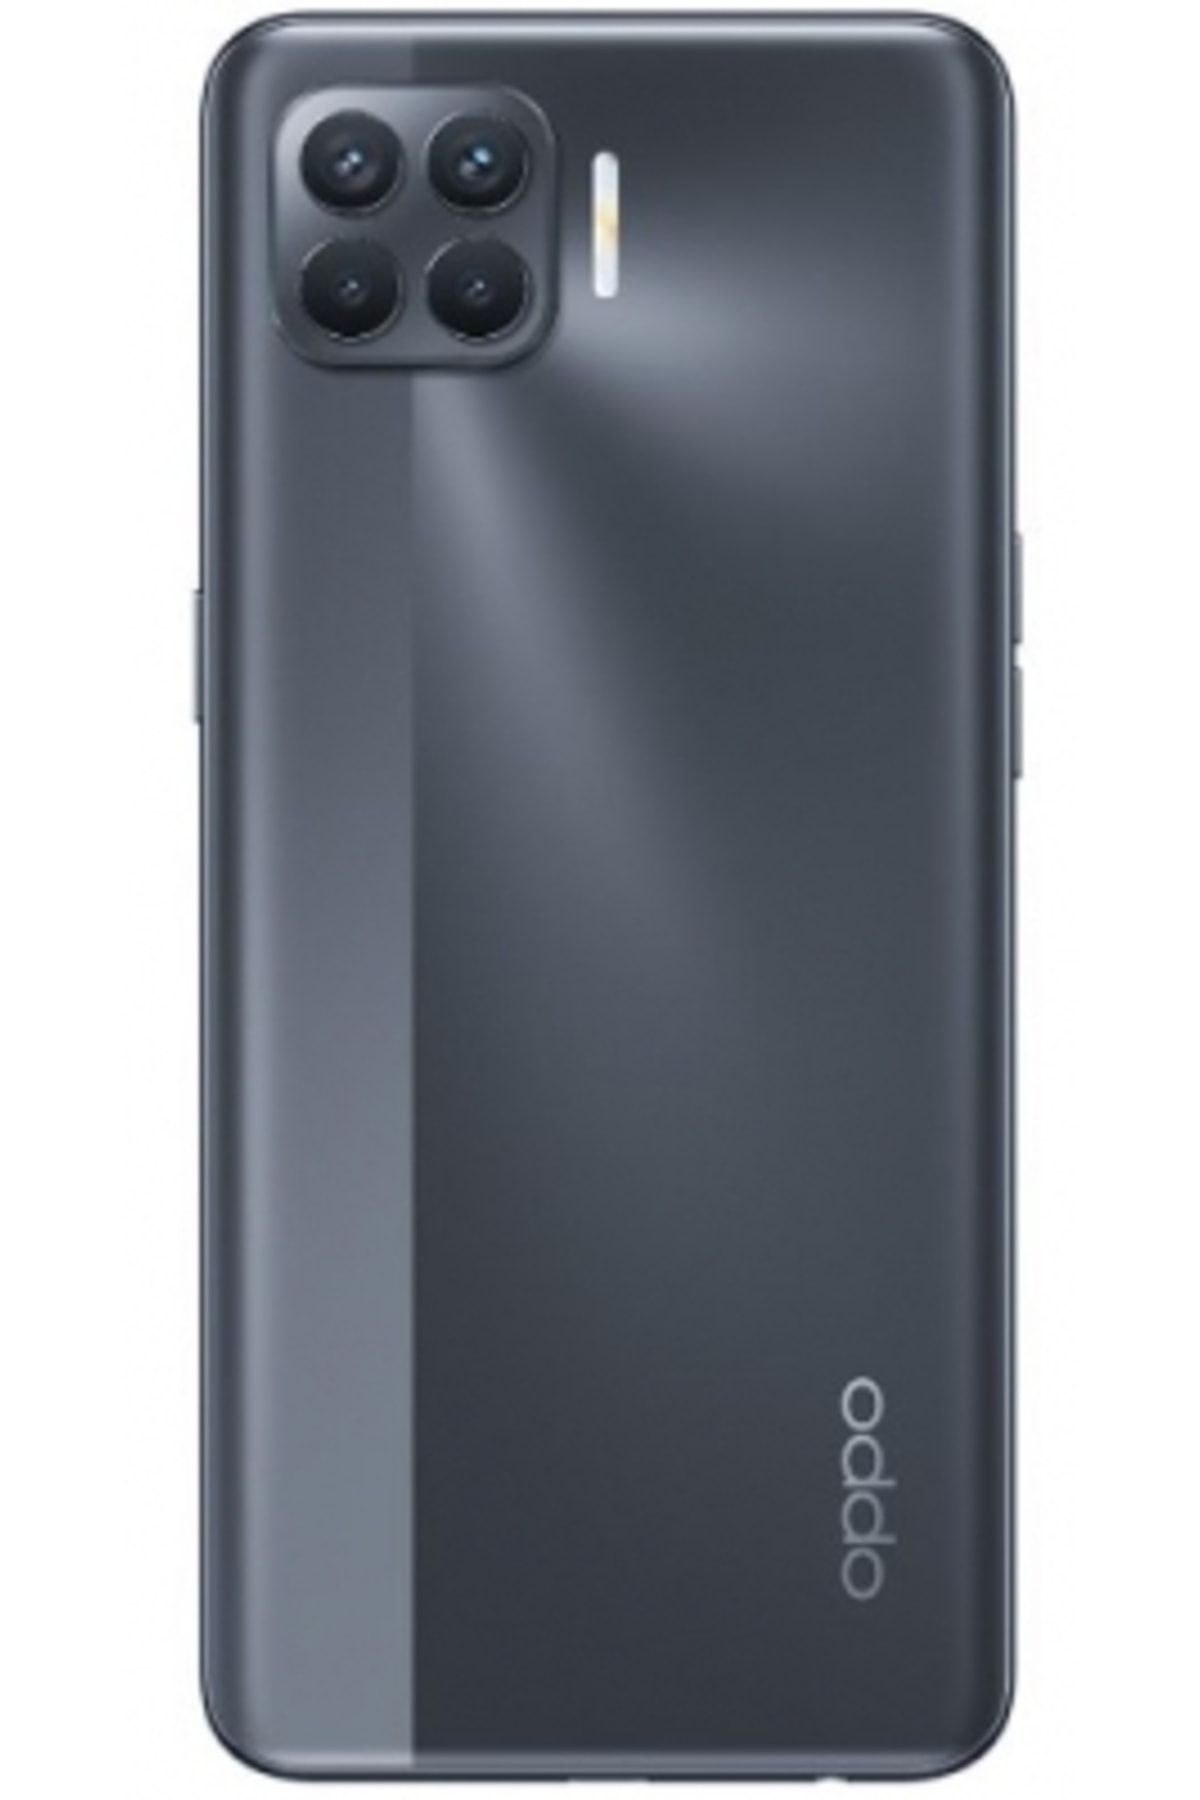 Oppo Yenilenmiş Reno 4 Lite 128 GB Black Cep Telefonu (12 Ay Garantili) - B Kalite